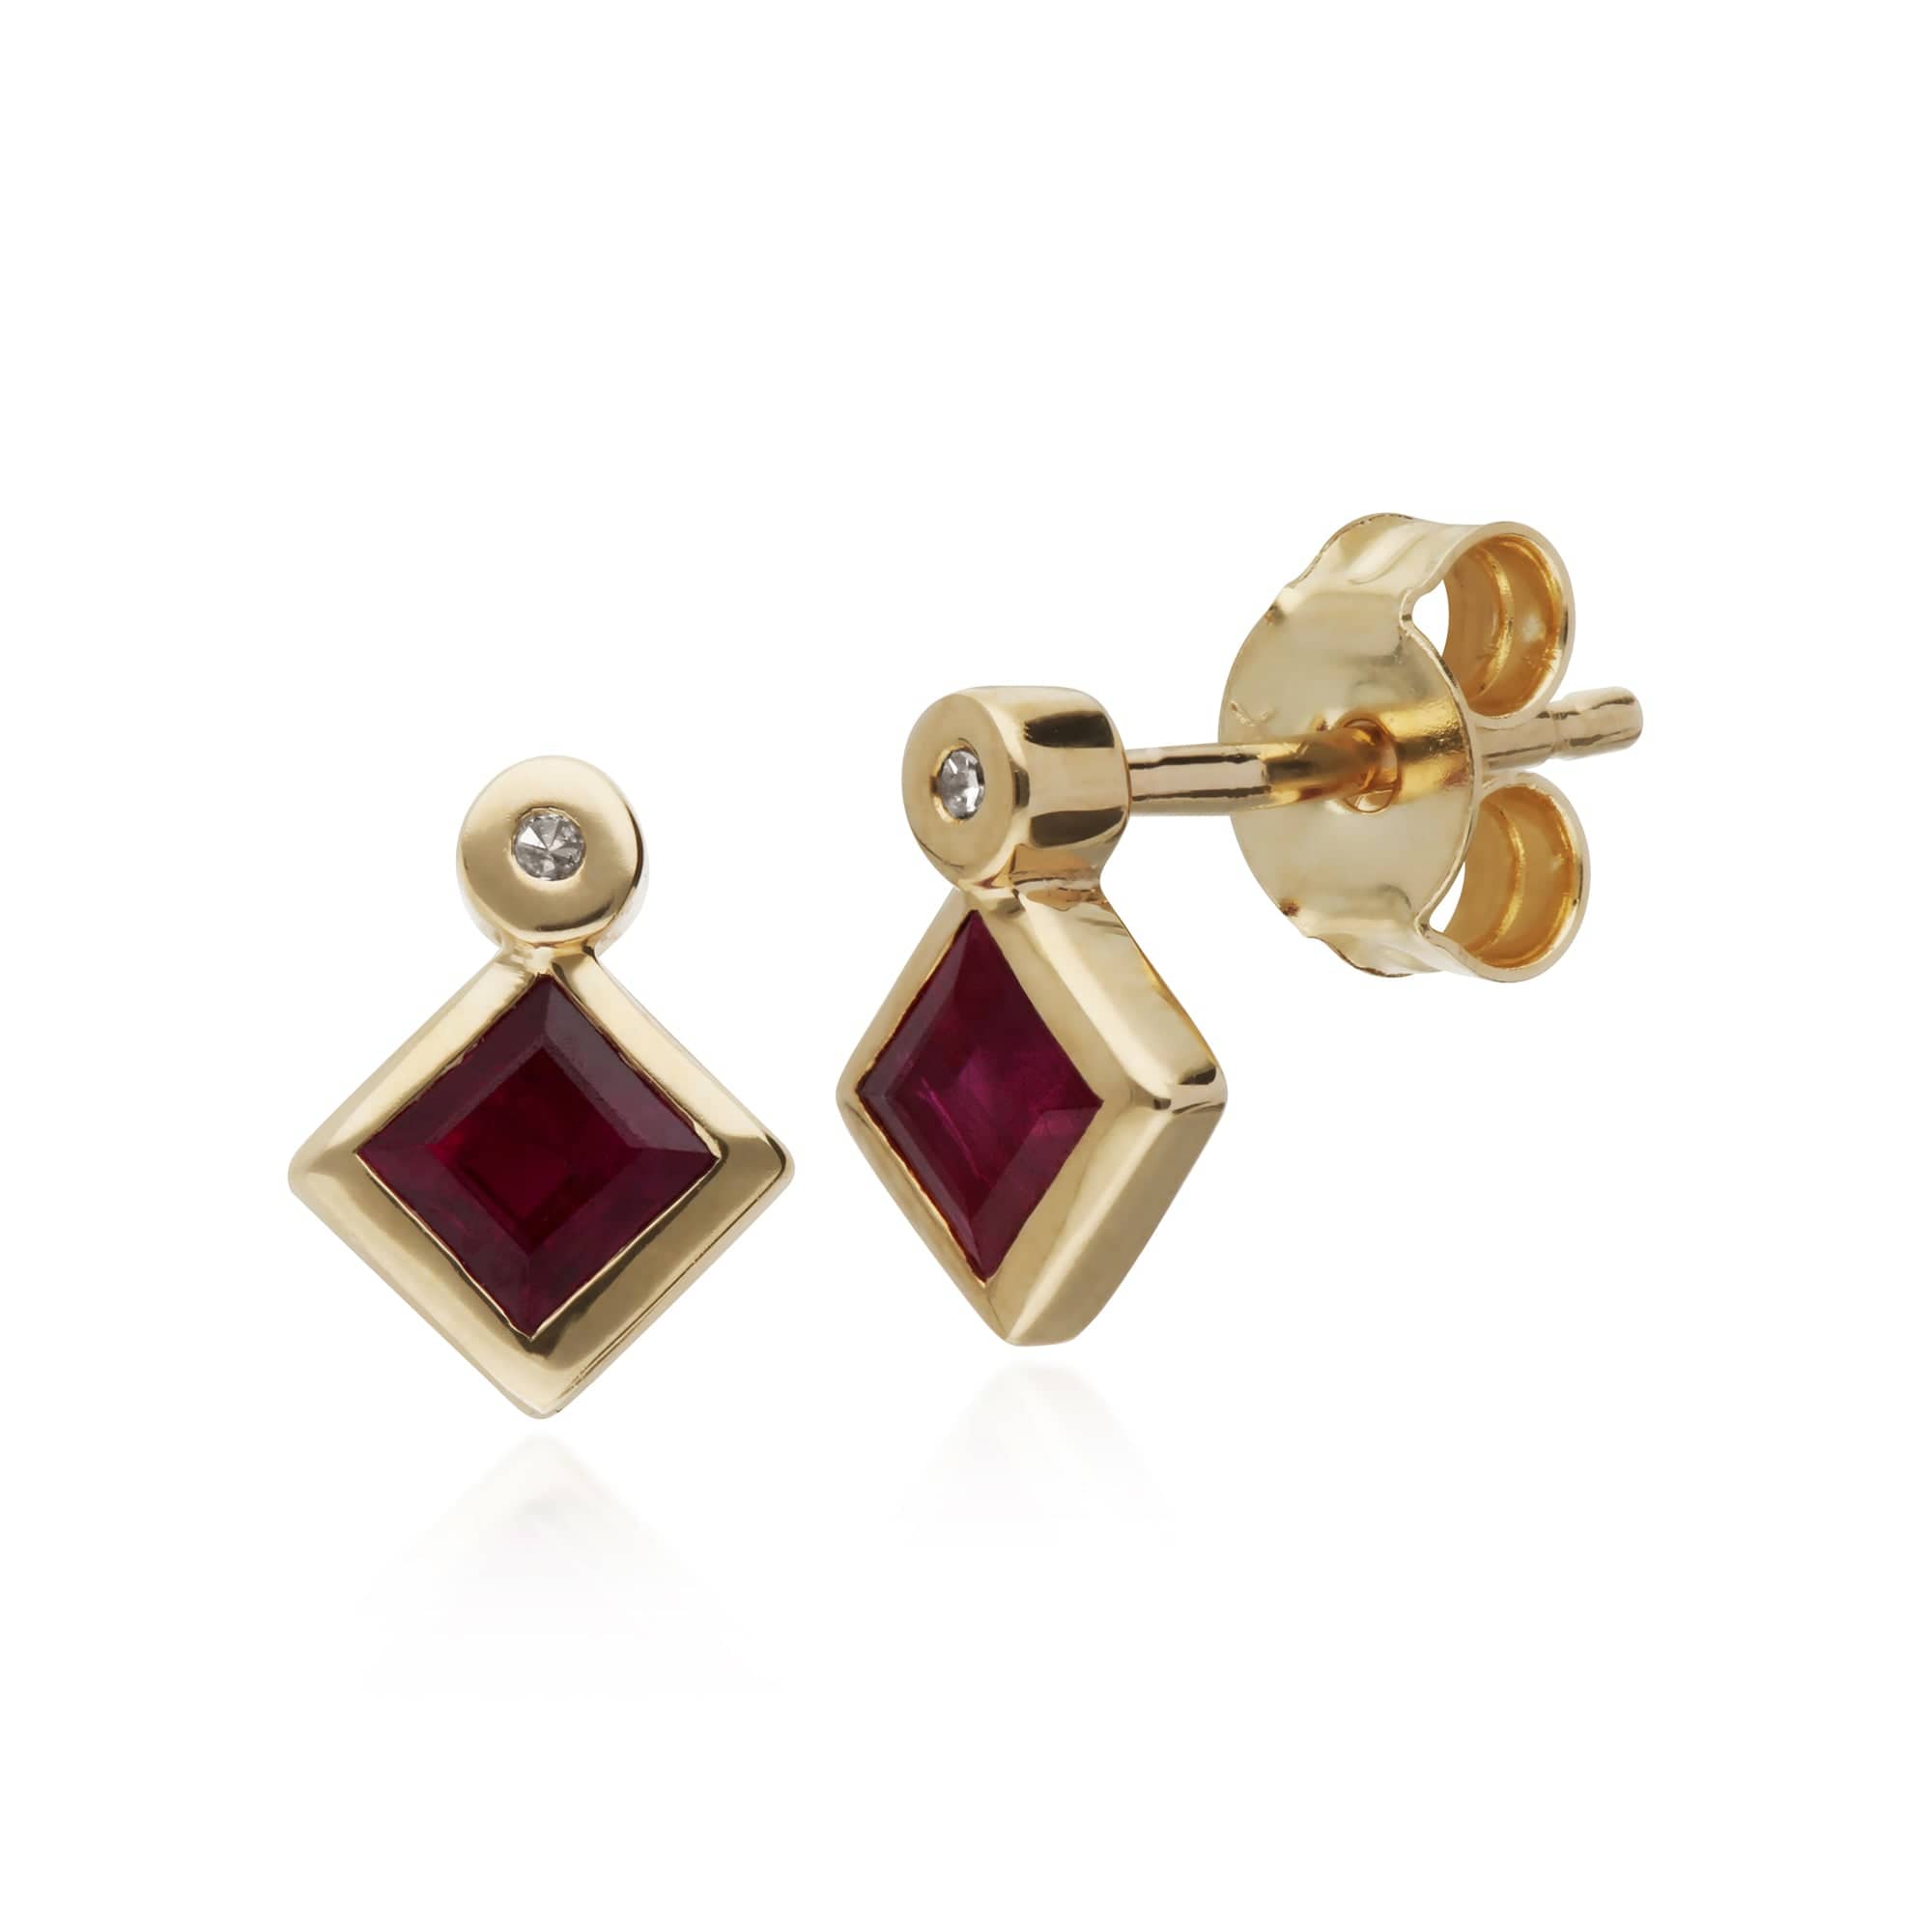 Geometric Square Ruby & Diamond Stud Earrings in 9ct Yellow Gold - Gemondo